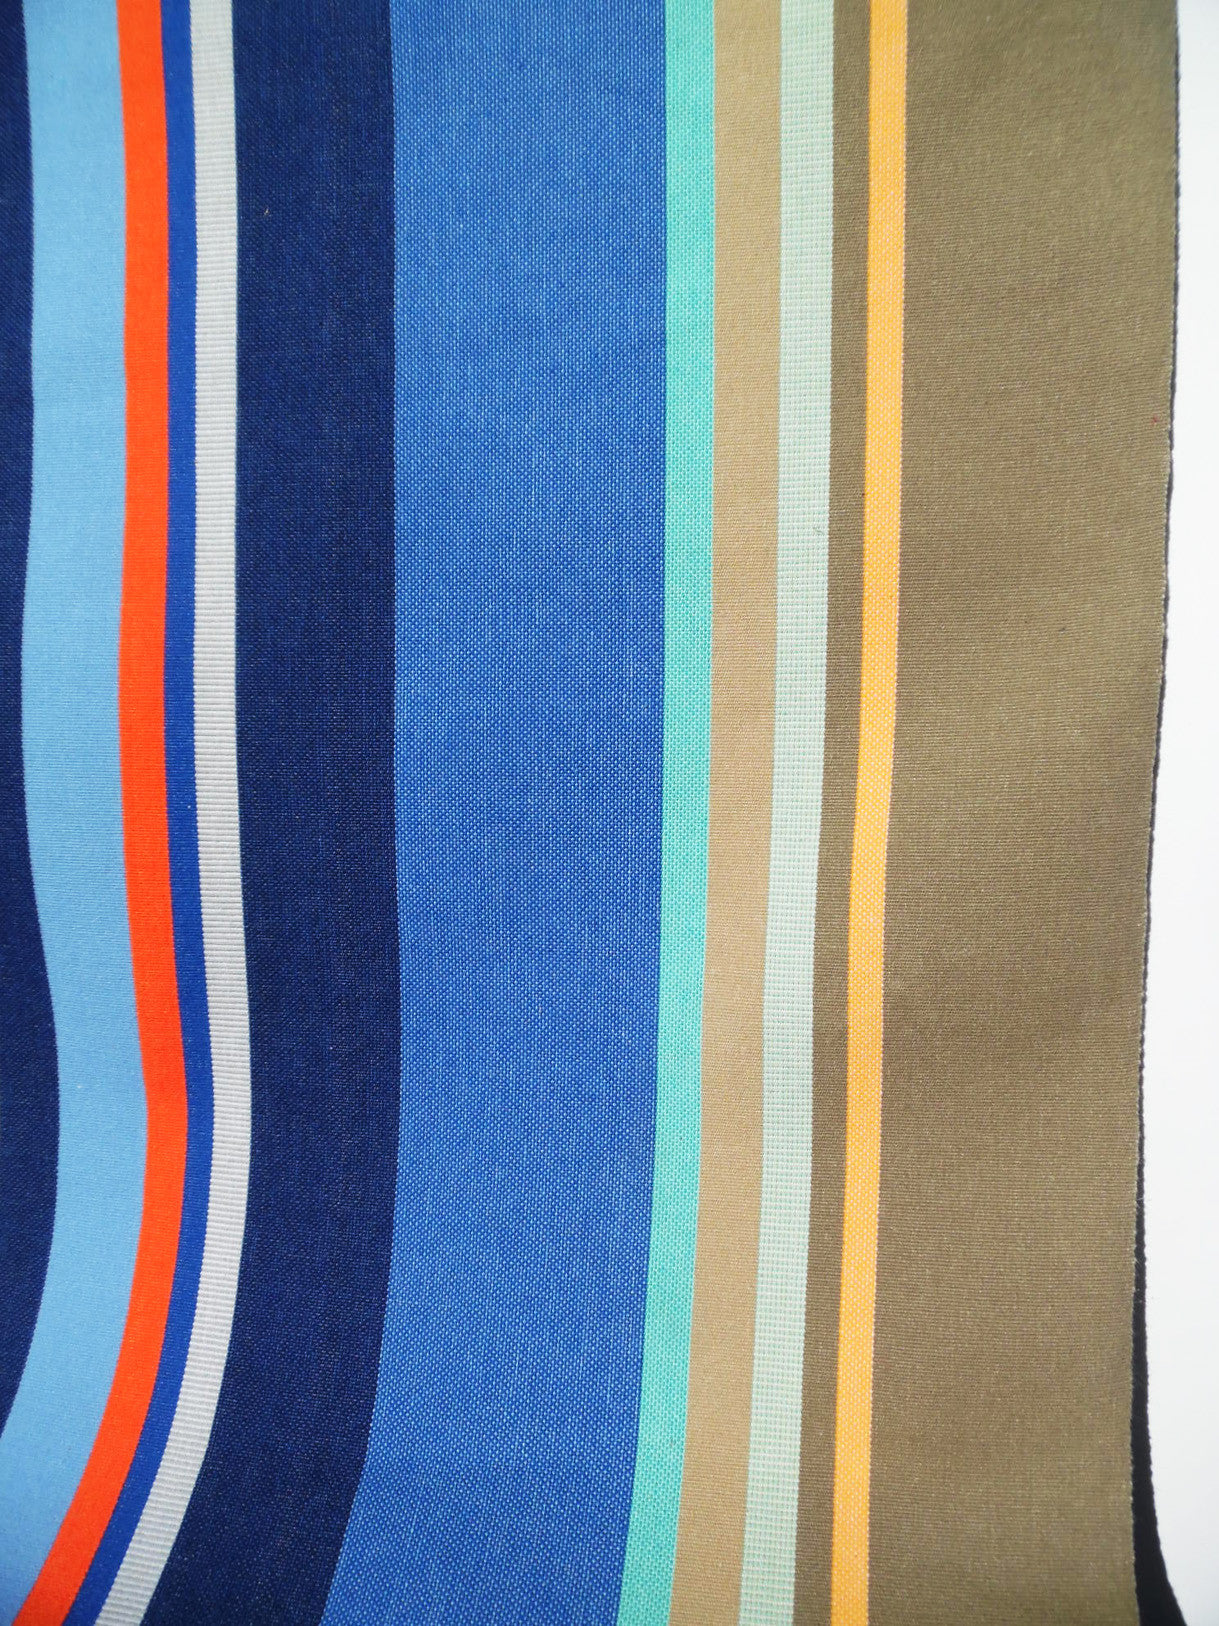 French Cotton Canvas Striped Textile Blue